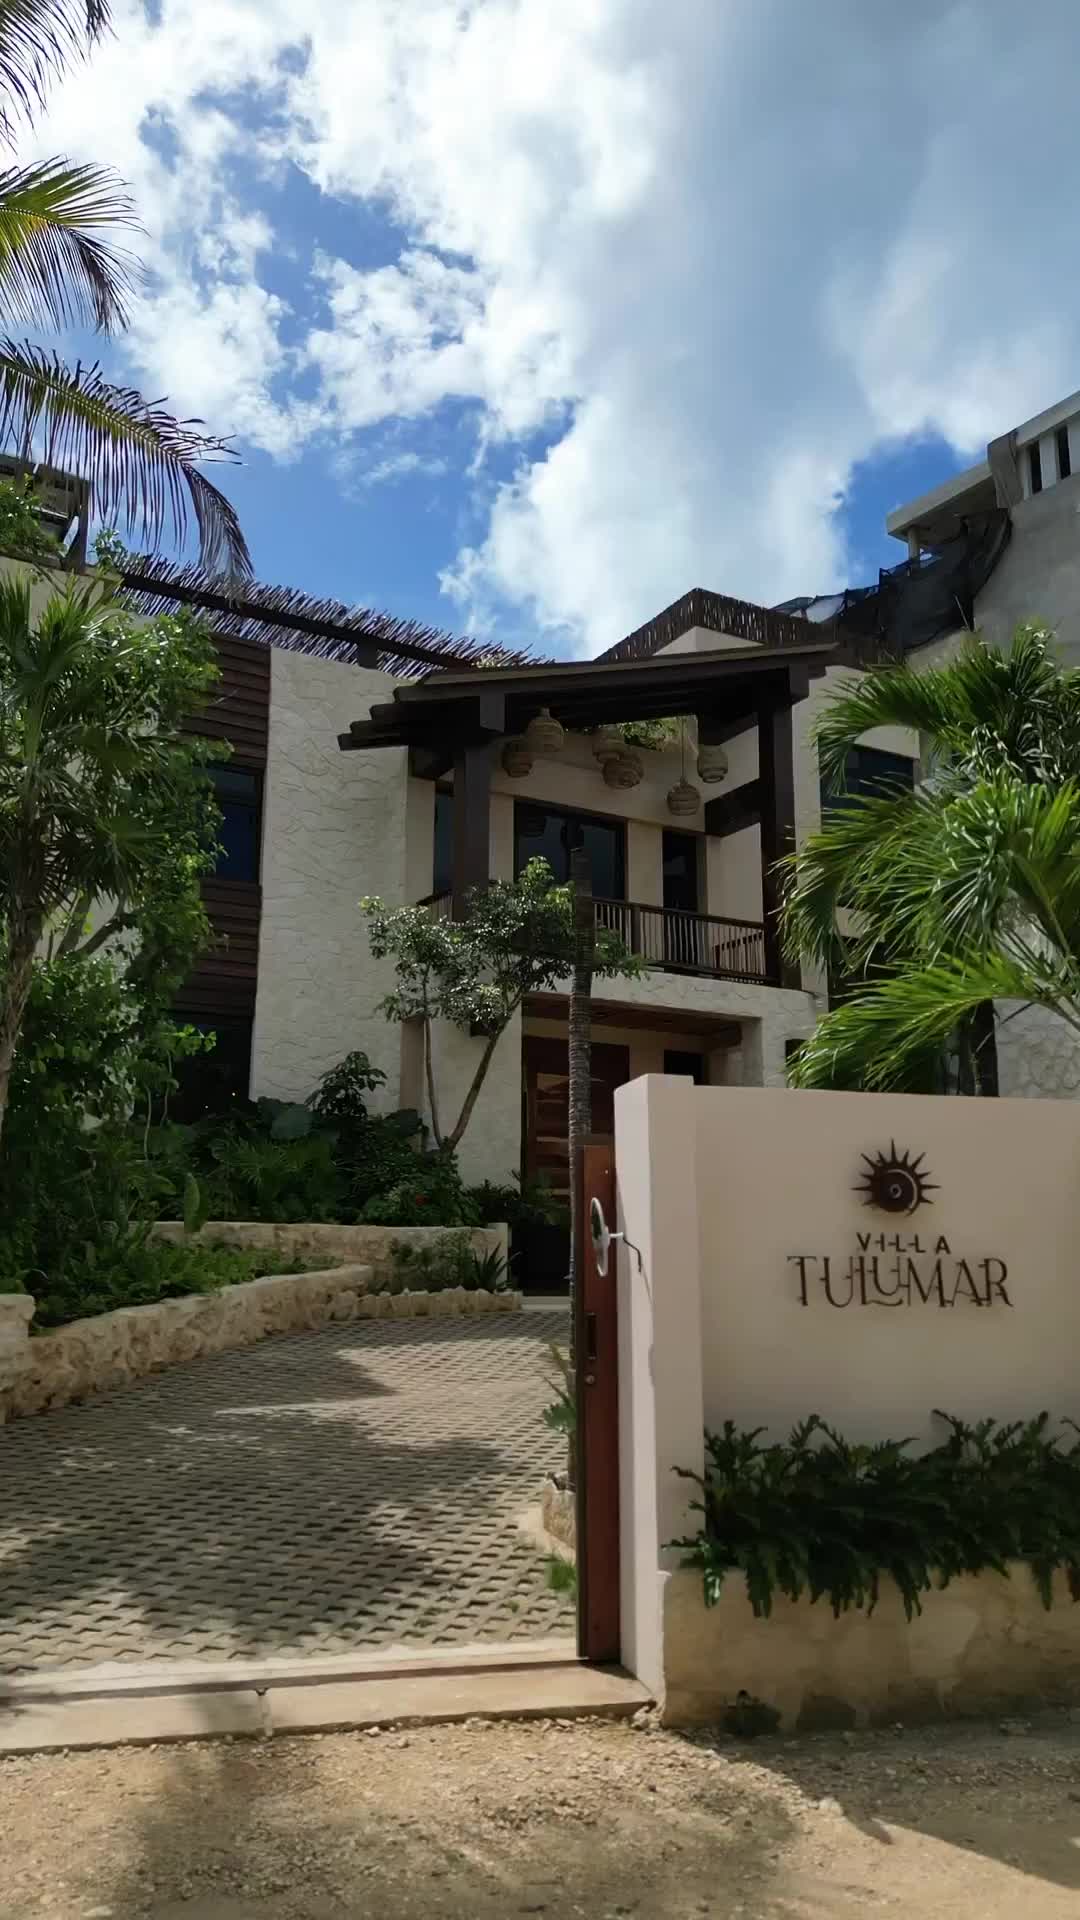 Luxury Villa in Tulum: Your Caribbean Dream Awaits